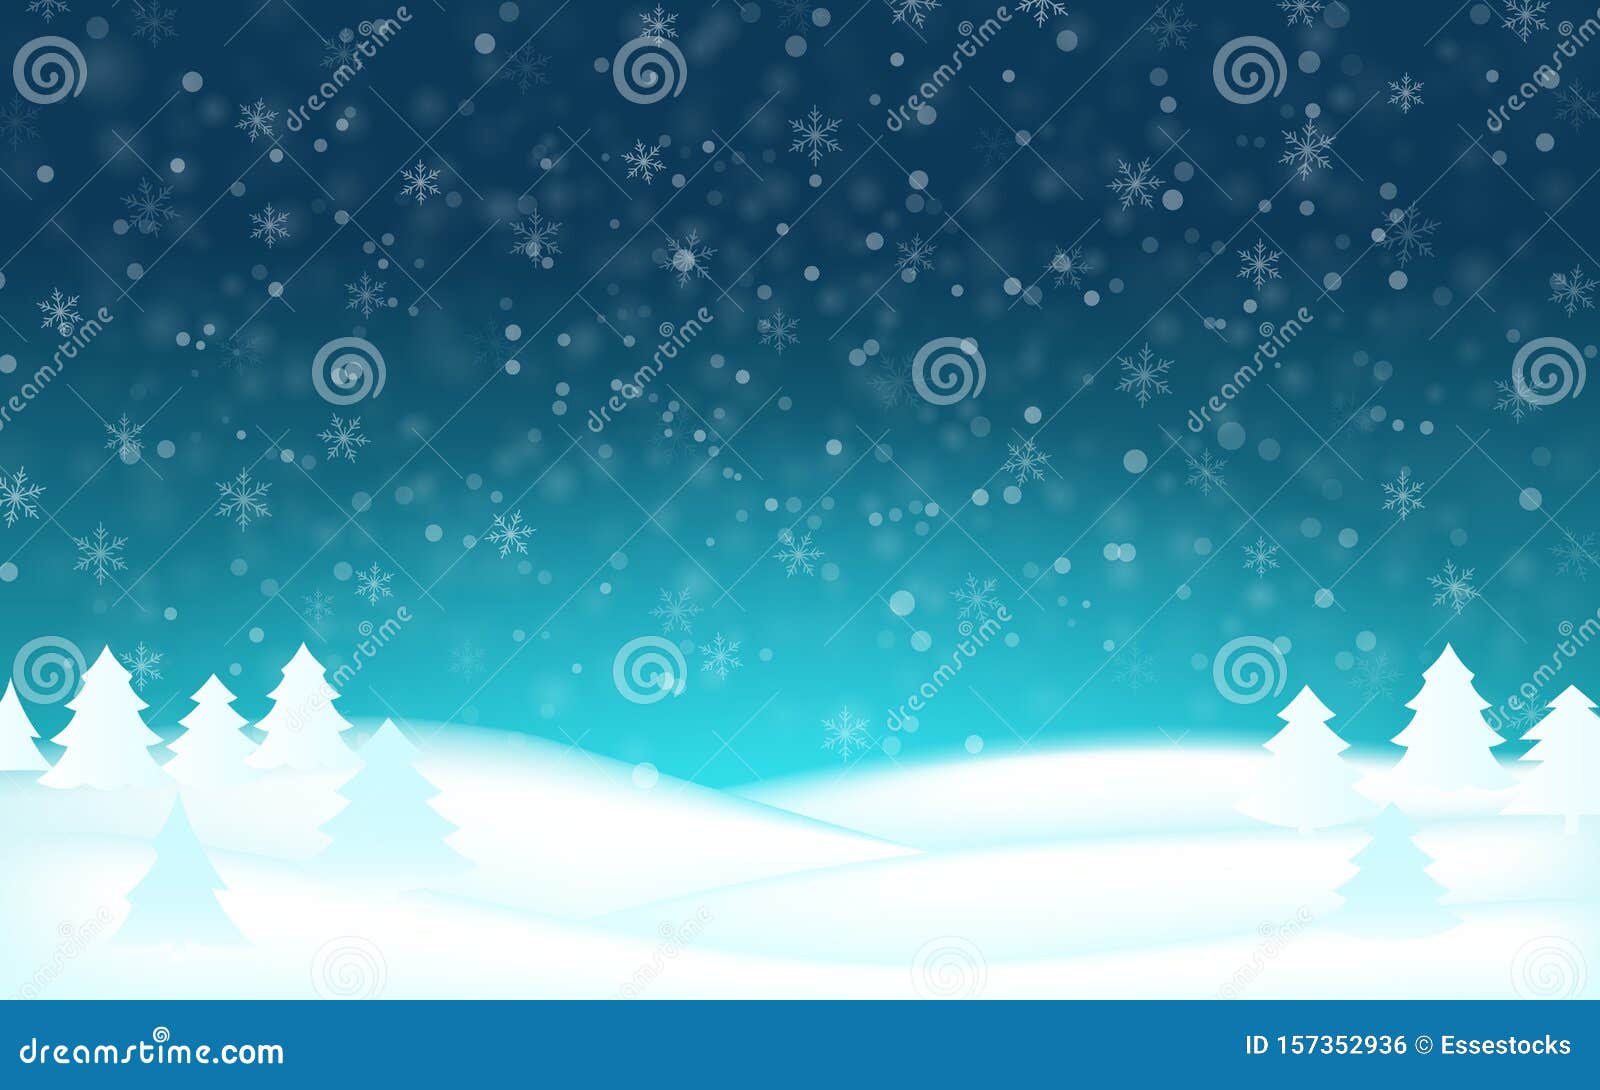 Set Of Various Fantasy Snow Flakes On Blue Background Christmas